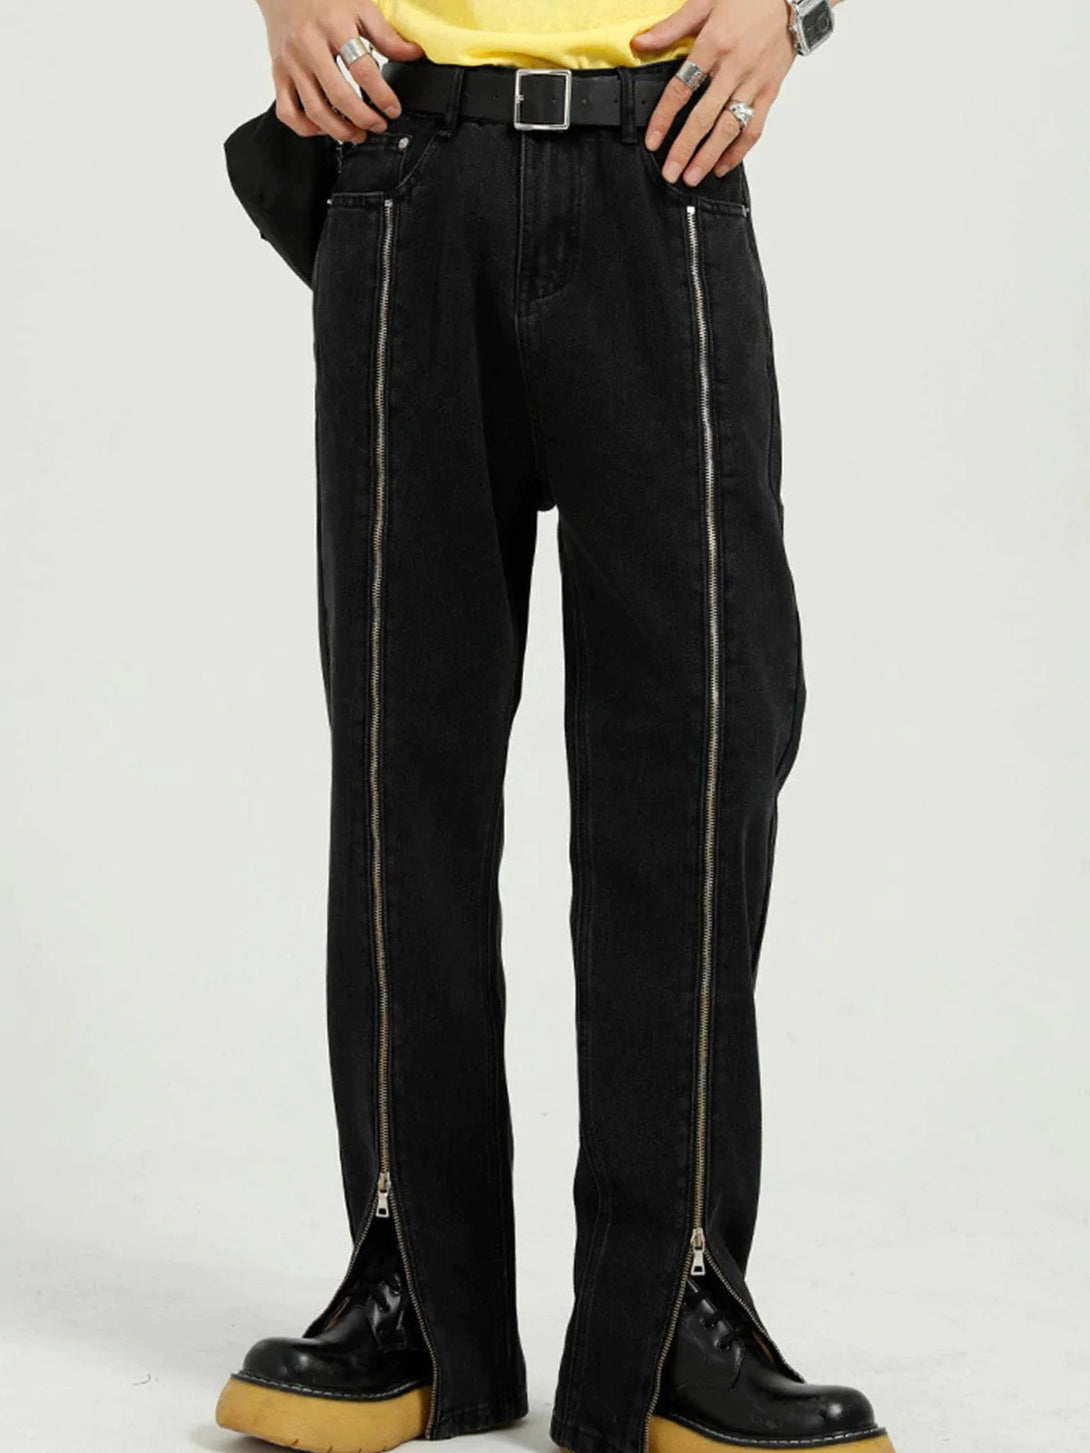 Majesda® - Zippered Straight-Leg Jeans outfit ideas streetwear fashion